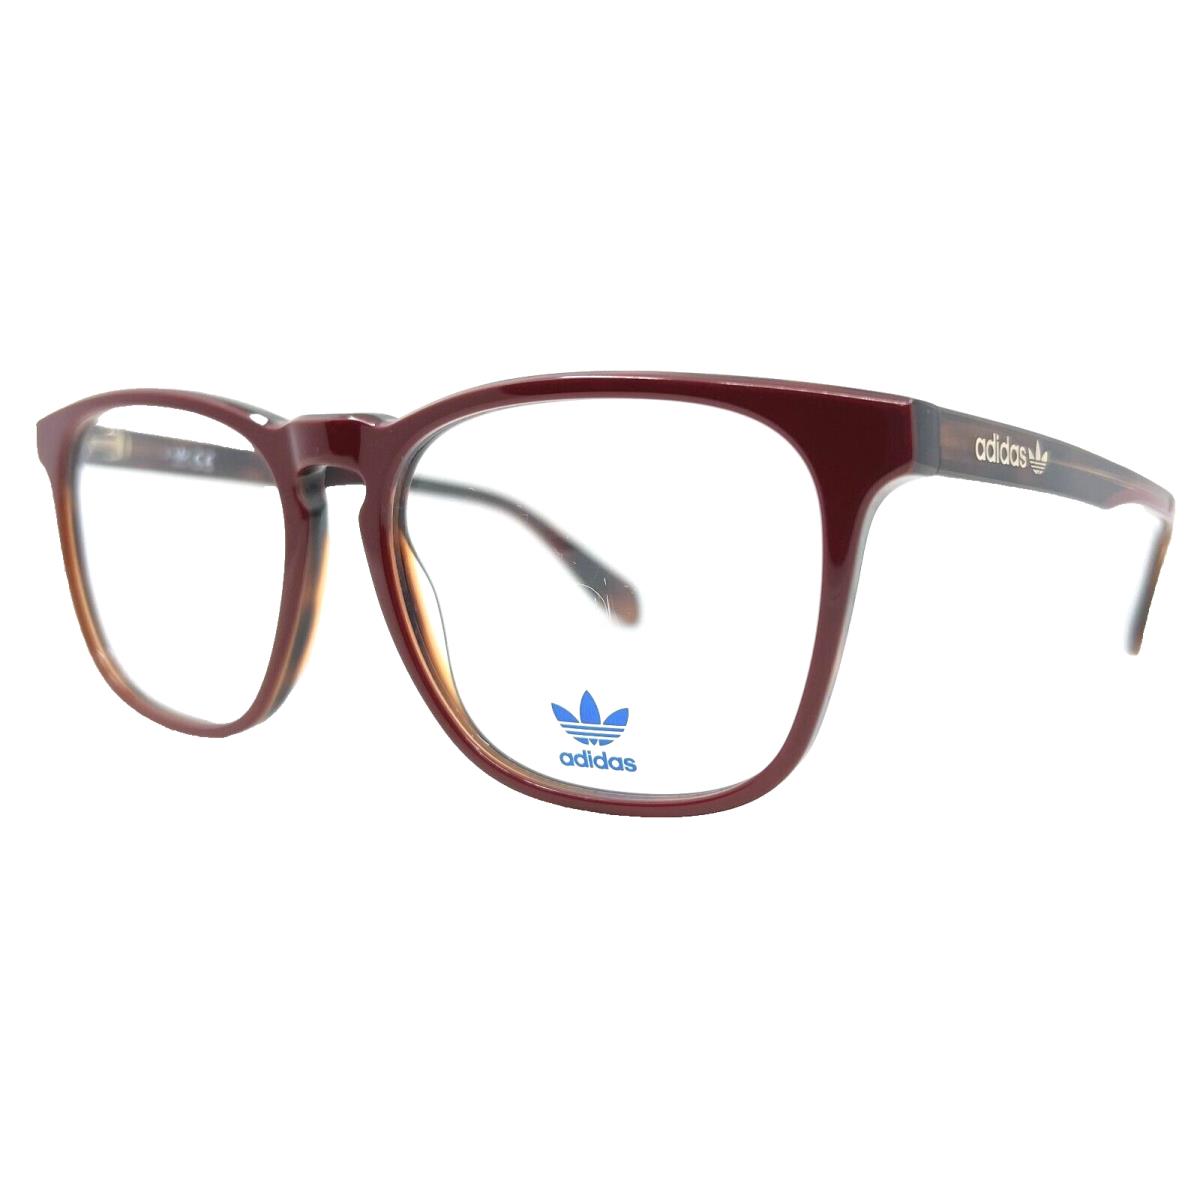 Adidas Originals - OR5020 068 56/16/145 Burgundy Eyeglasses Case